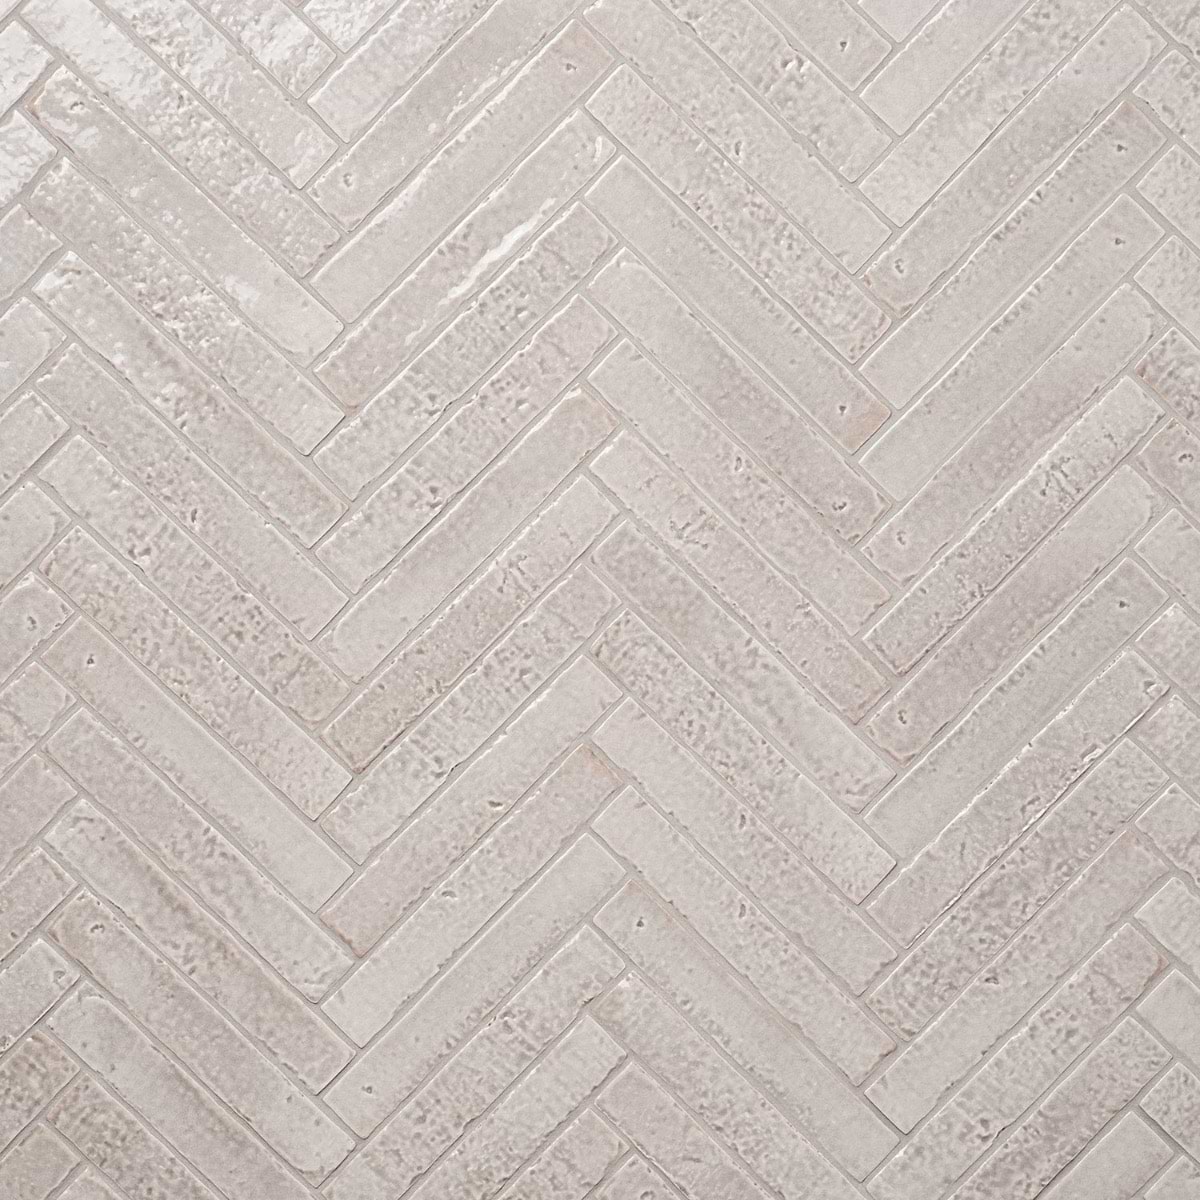 Wabi Sabi Agata Gray 1.5x9 Crackled Glossy Ceramic Tile | Tilebar.com